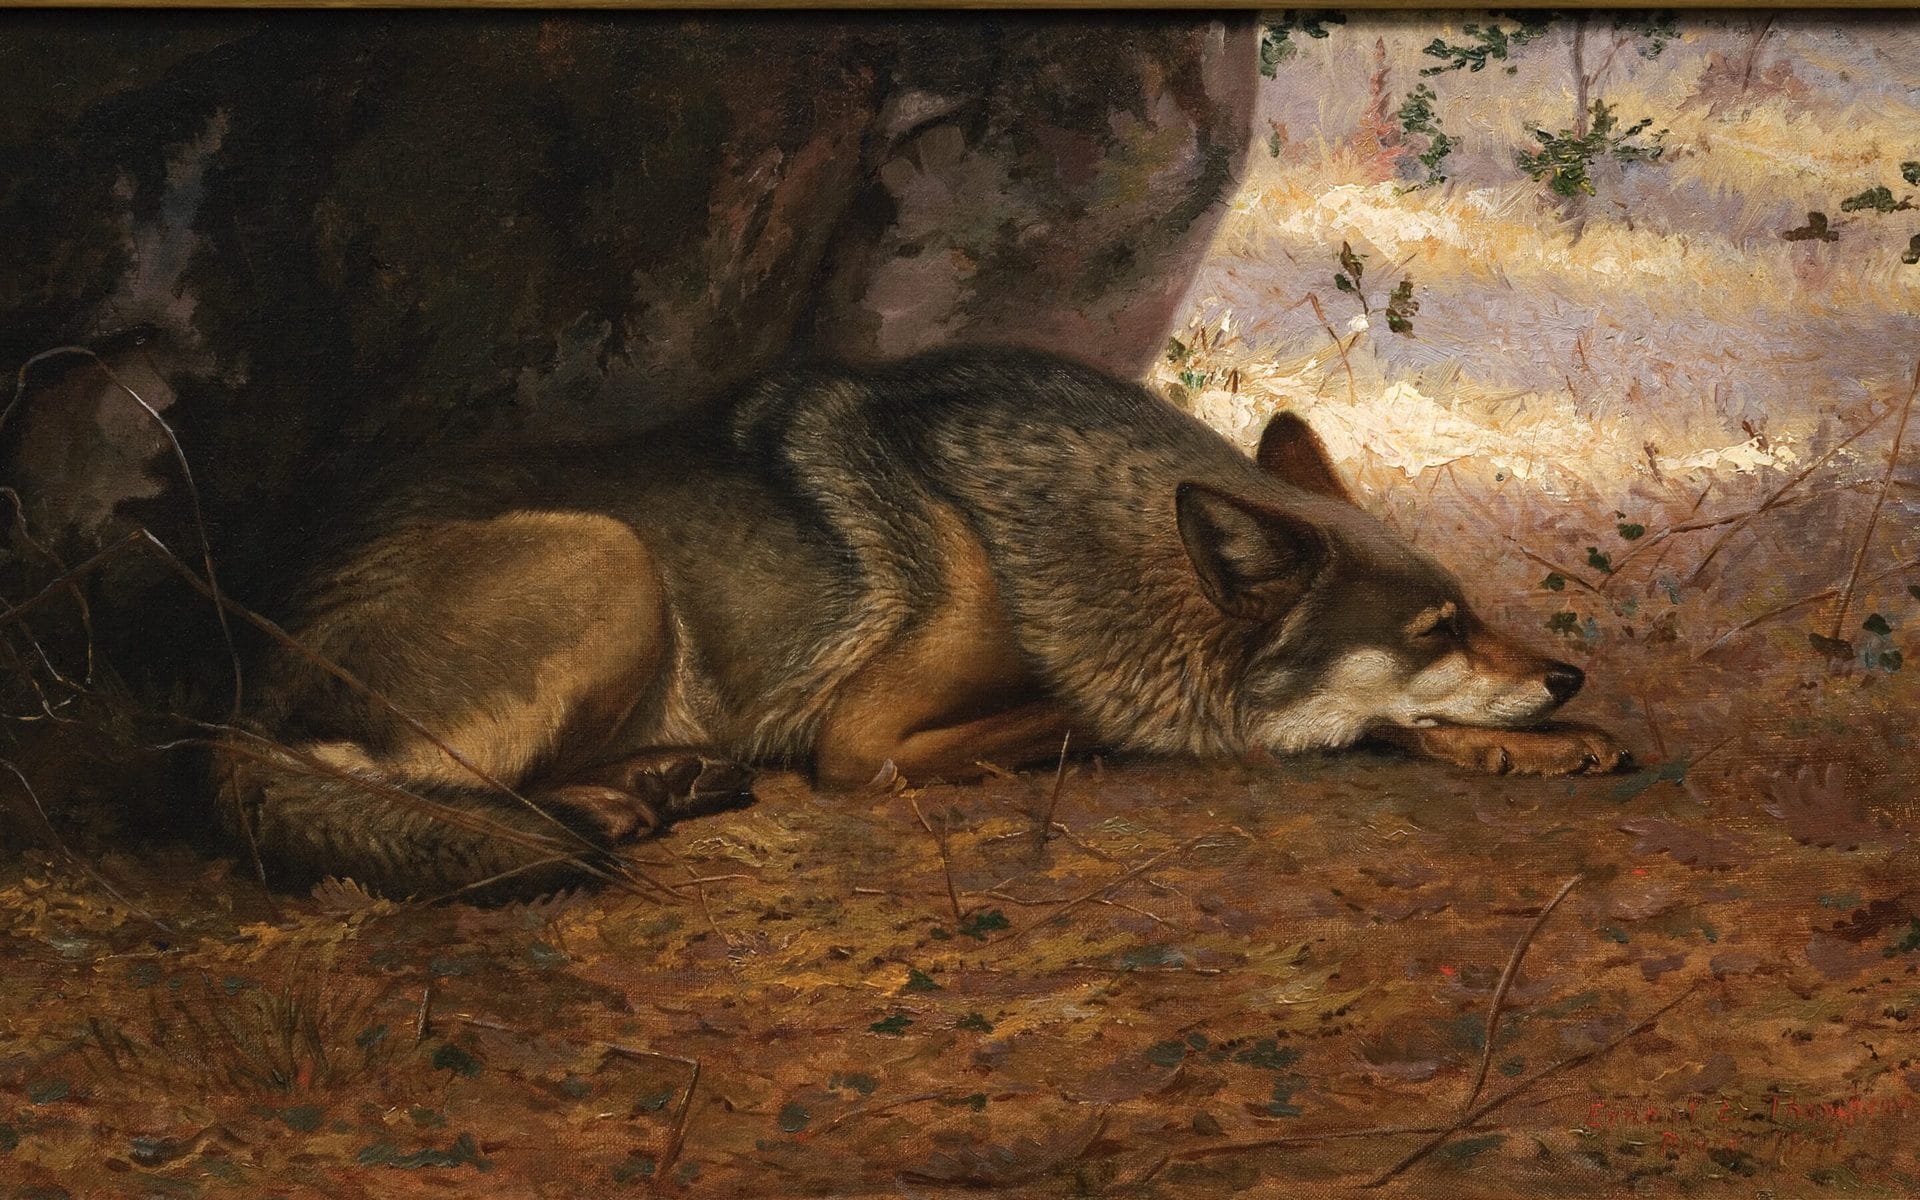 The Sleeping Wolf by Ernest Thompson Seton